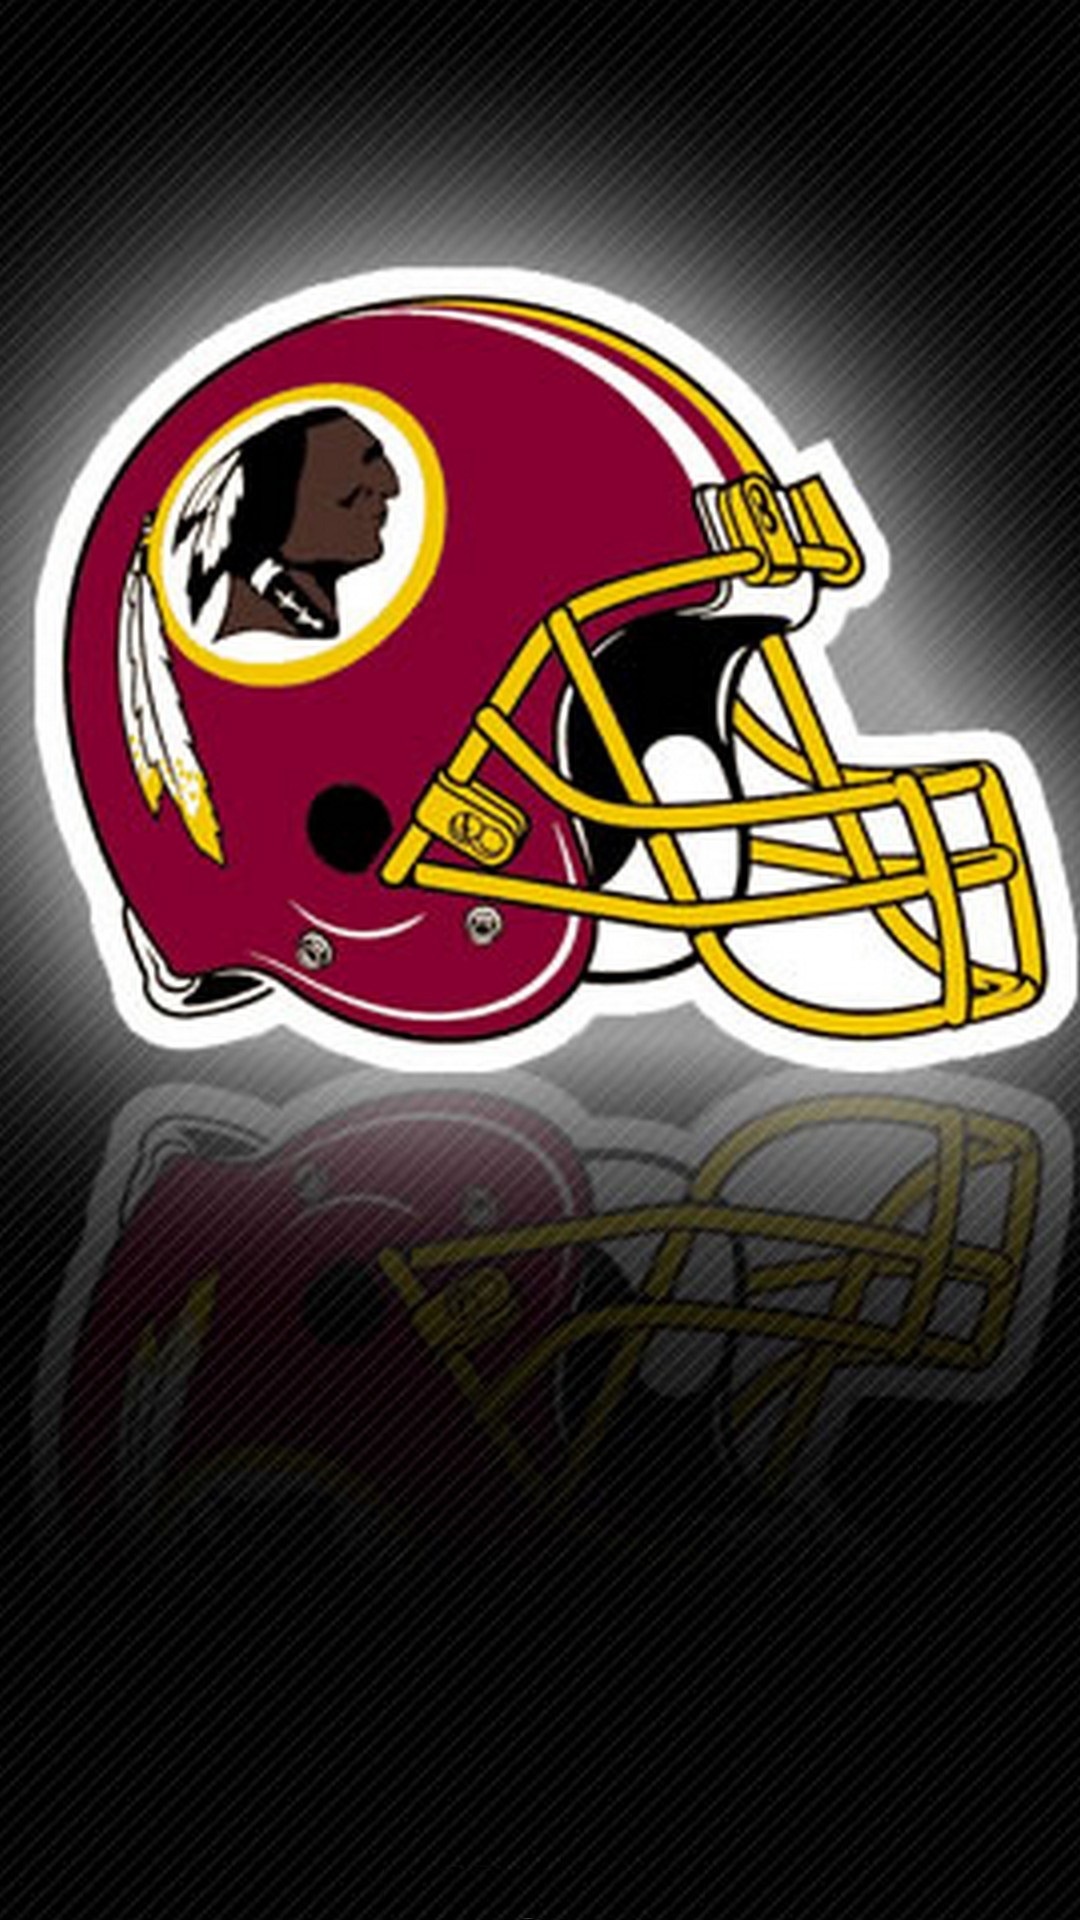 Washington Redskins Wallpaper iPhone HD Nfl Football